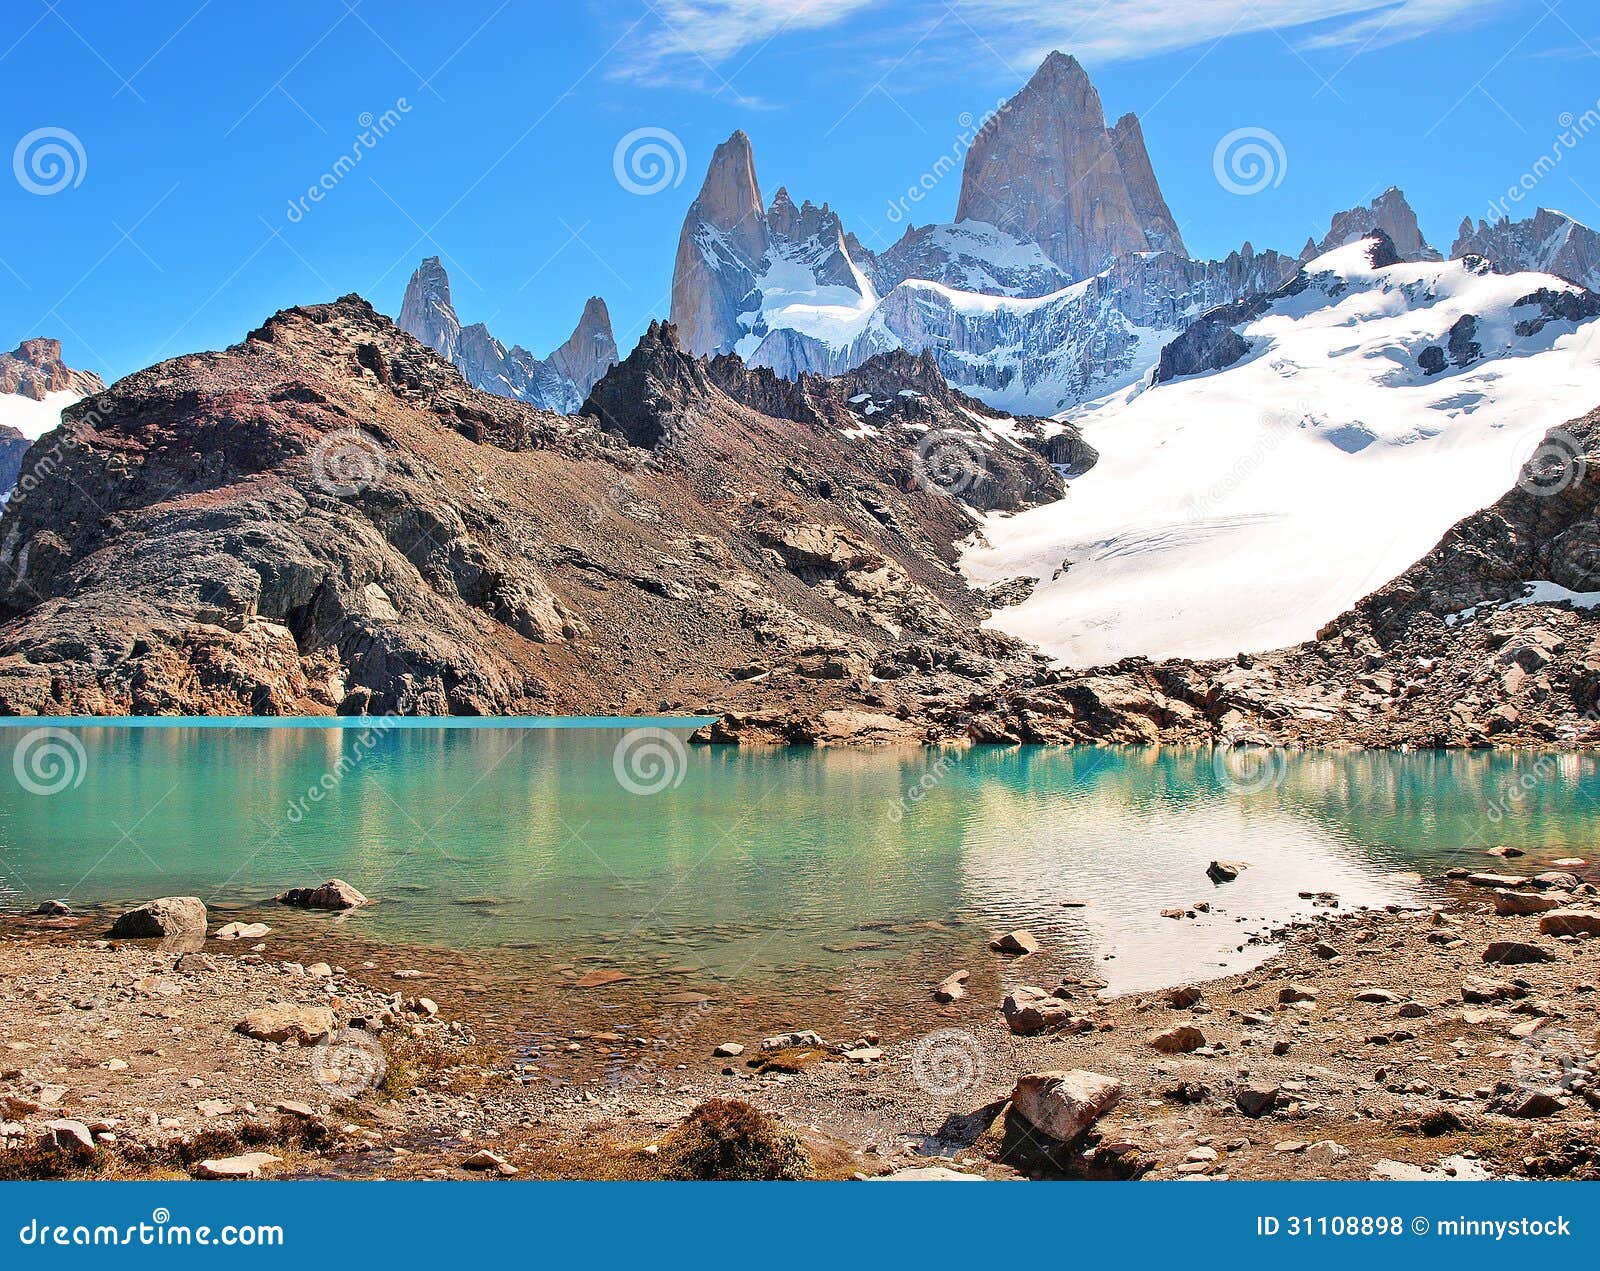 mountain landscape with mt fitz roy and laguna de los tres in los glaciares national park, patagonia, argentina, south america